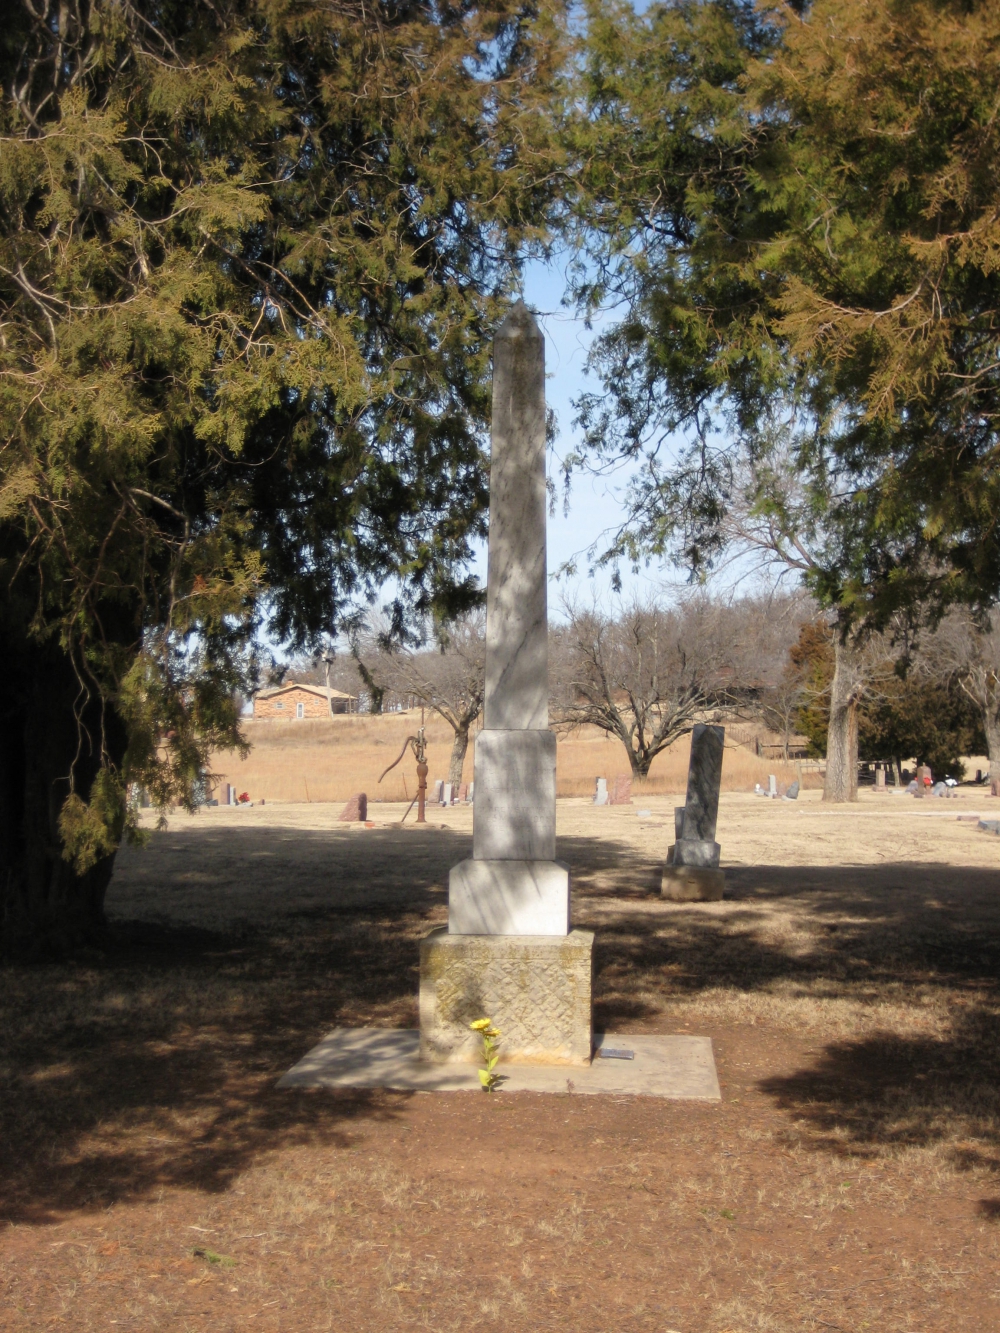 Pawnee, Oklahoma - Highland Cemetery Rough Riders Monument